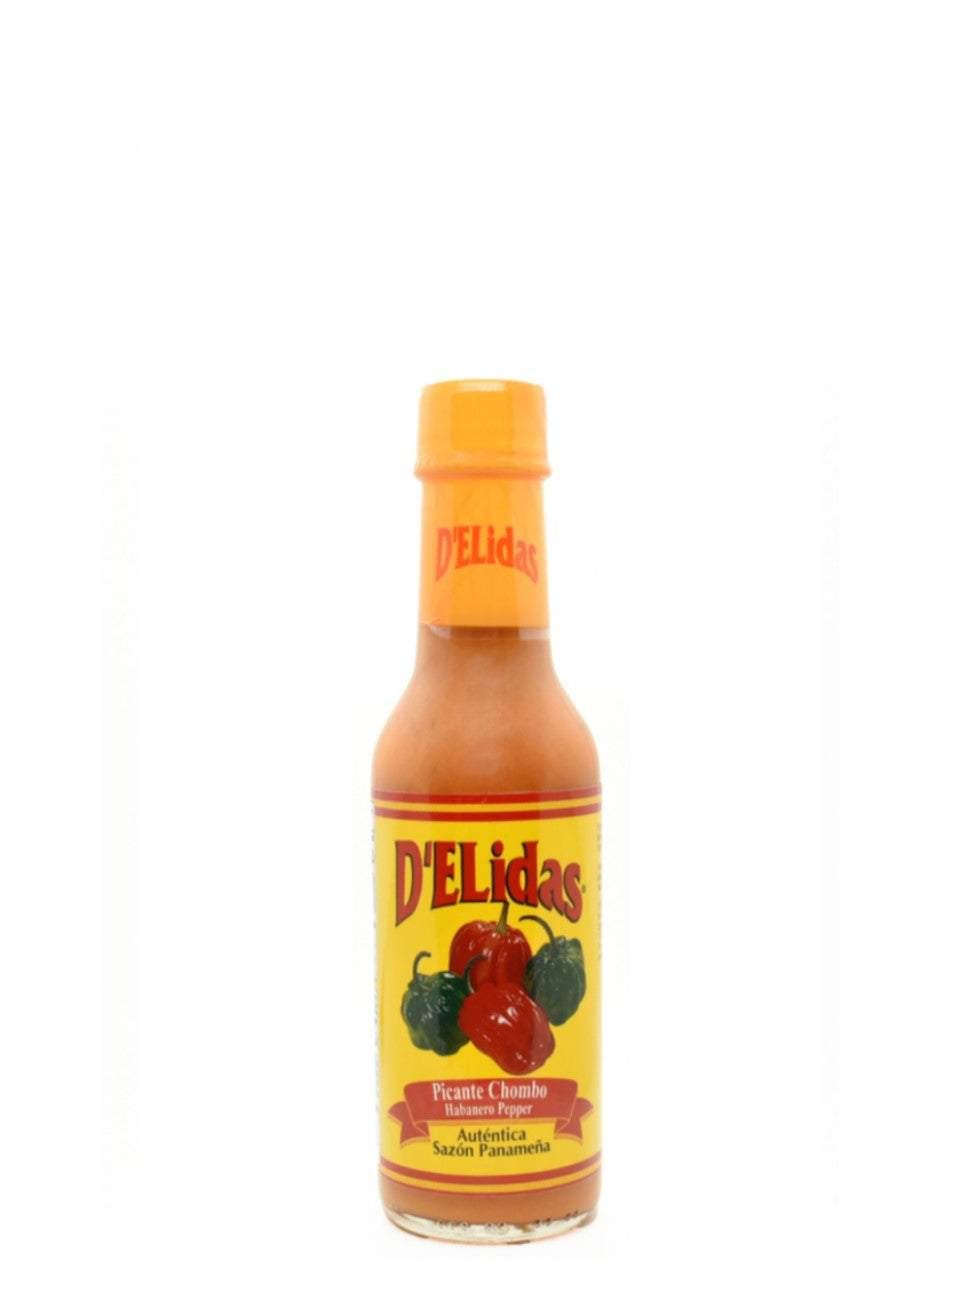 D'ELIDAS Hot Sauce Chombo Habanero Pepper Picante ALL NATURAL, NON GMO, GLUTEN FREE, KETO FRIENDLY (2oz TRAVEL SIZE)